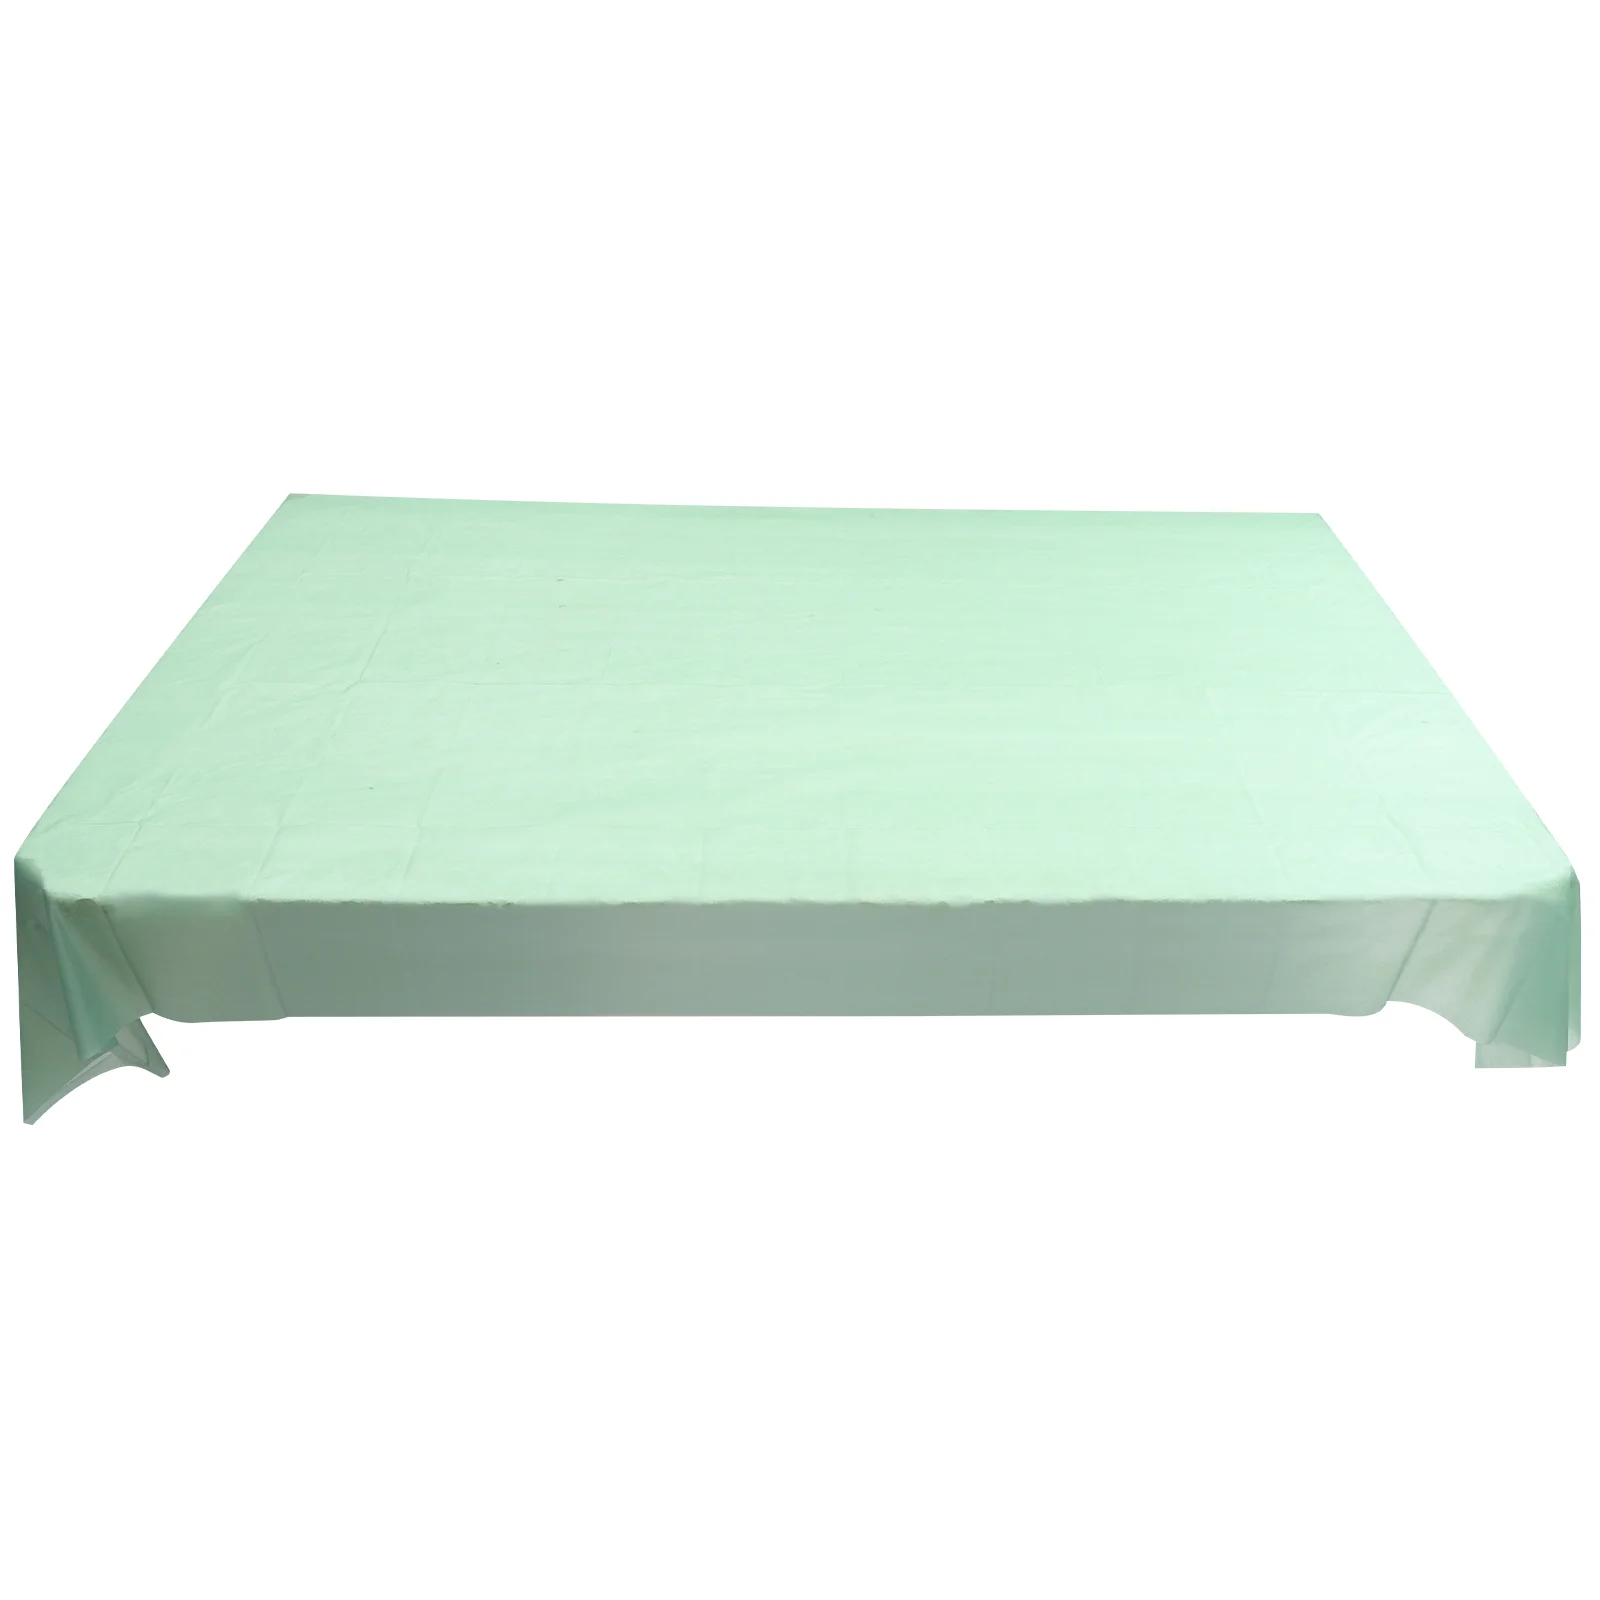 

3 Pcs Birthday Party Table Cloth Supplies Tablecloth For Green Portable Rectangular Tablecloths Disposable Peva